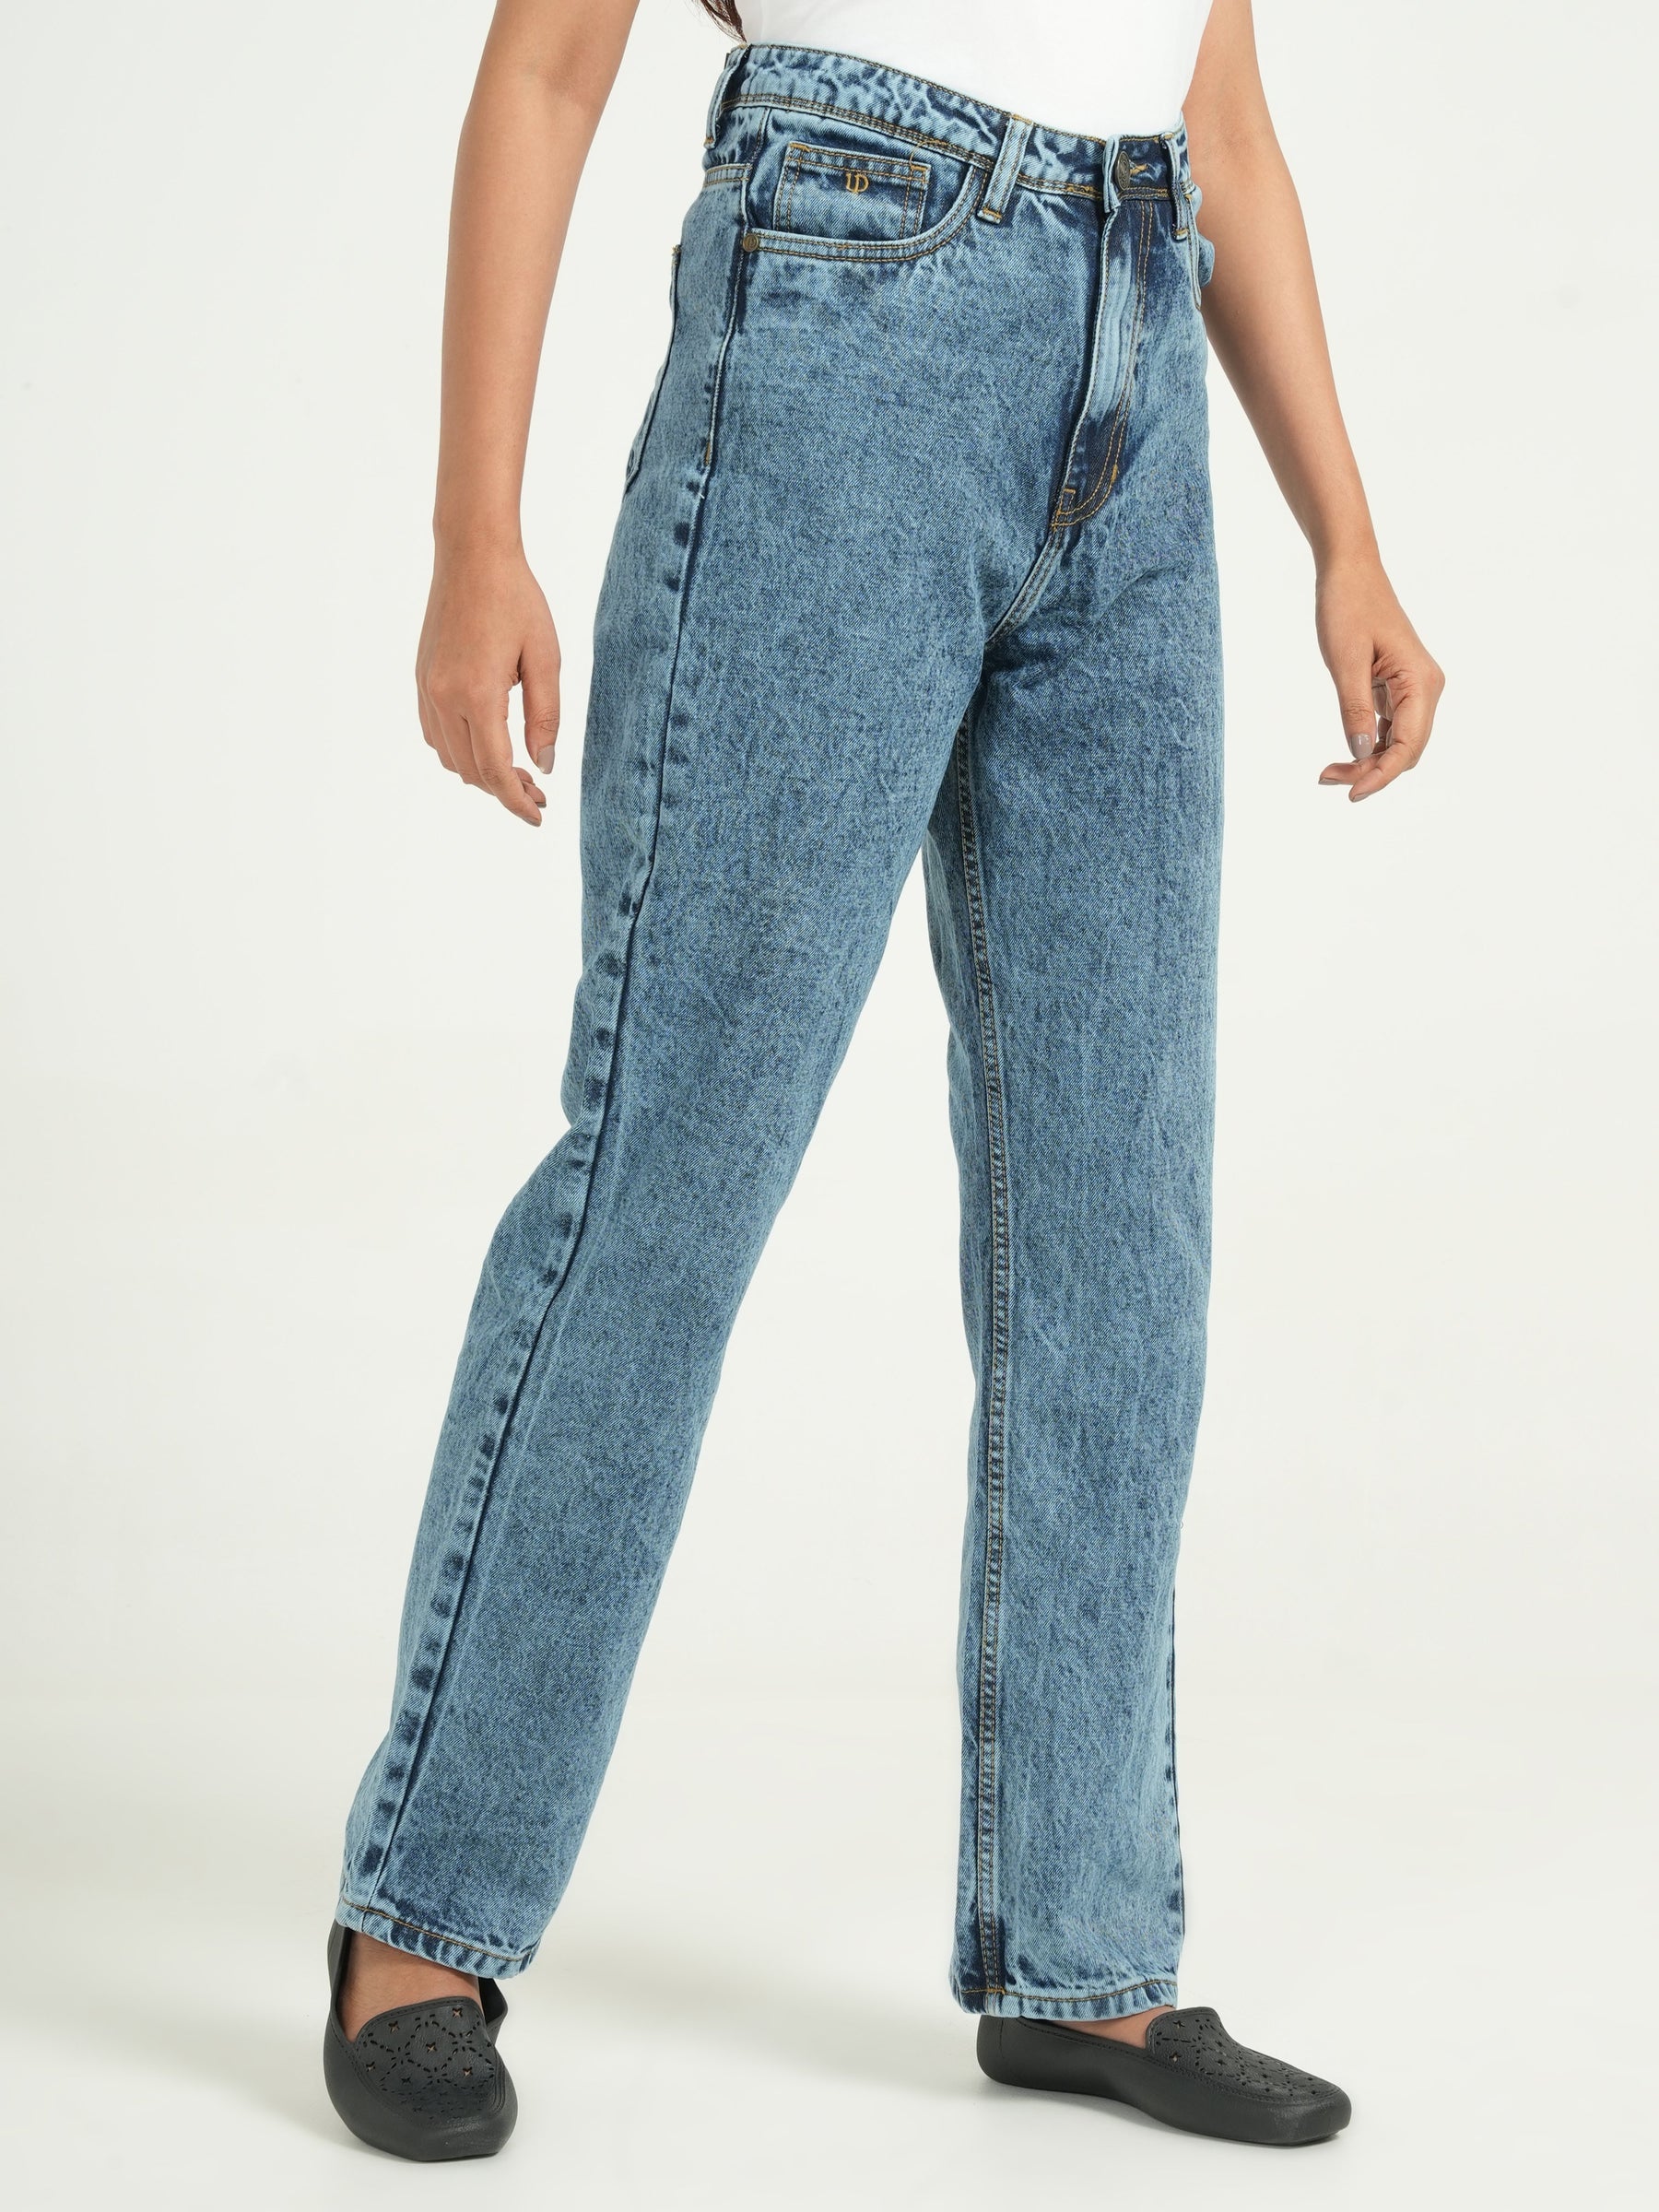 Buy Girls Black Regular Fit Jeans Online - 727299 | Allen Solly